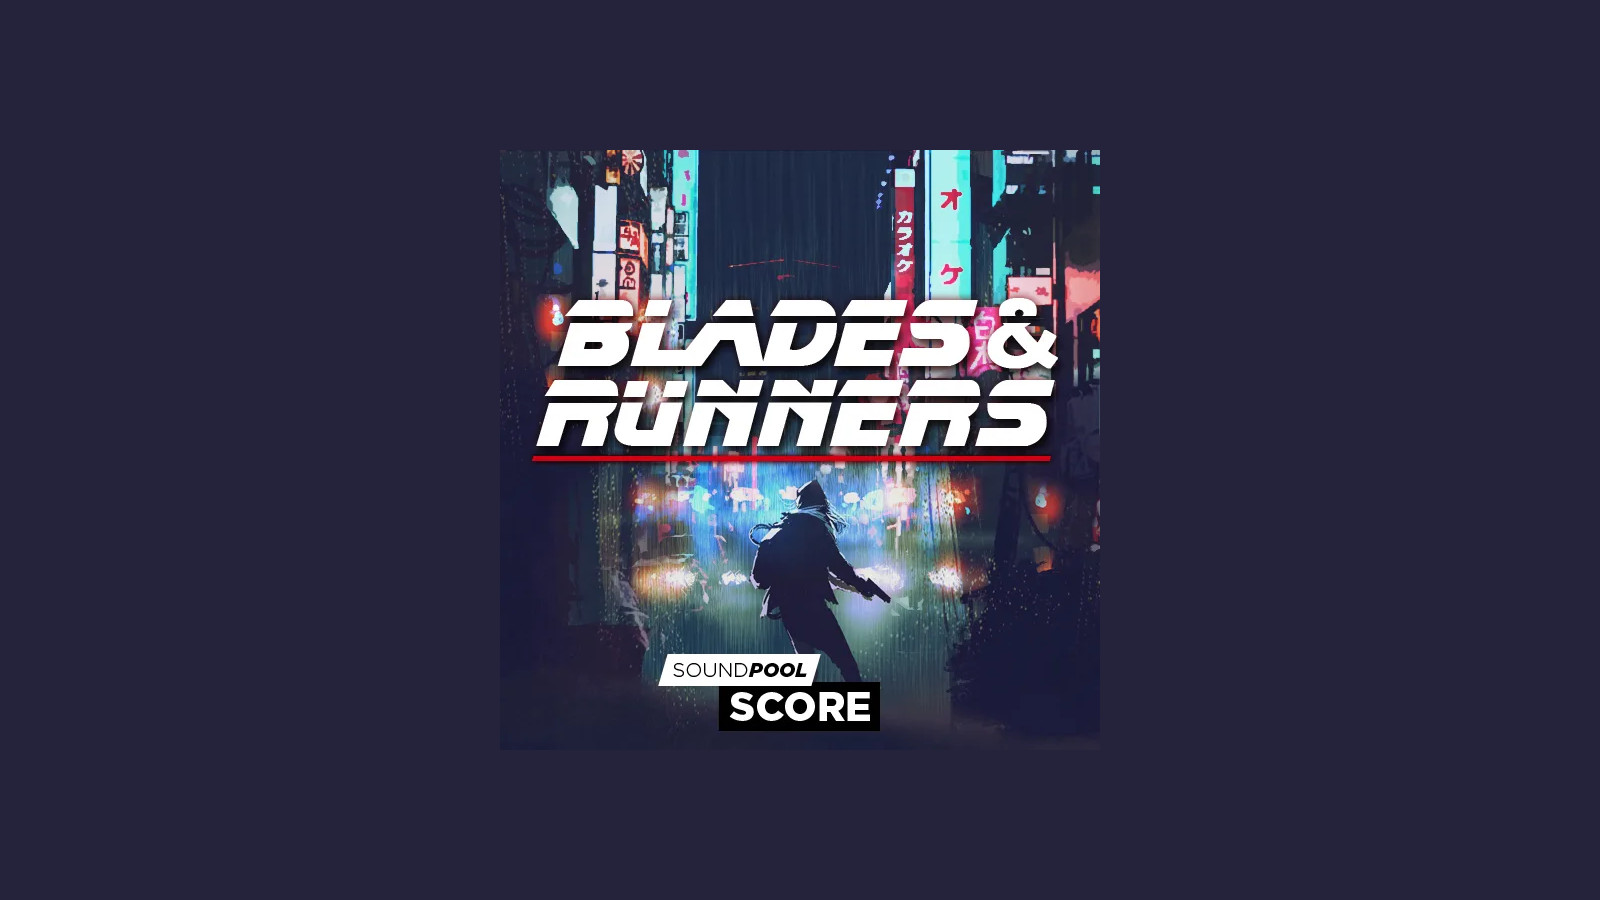 MAGIX Soundpool Blades & Runners ProducerPlanet CD Key USD 5.65